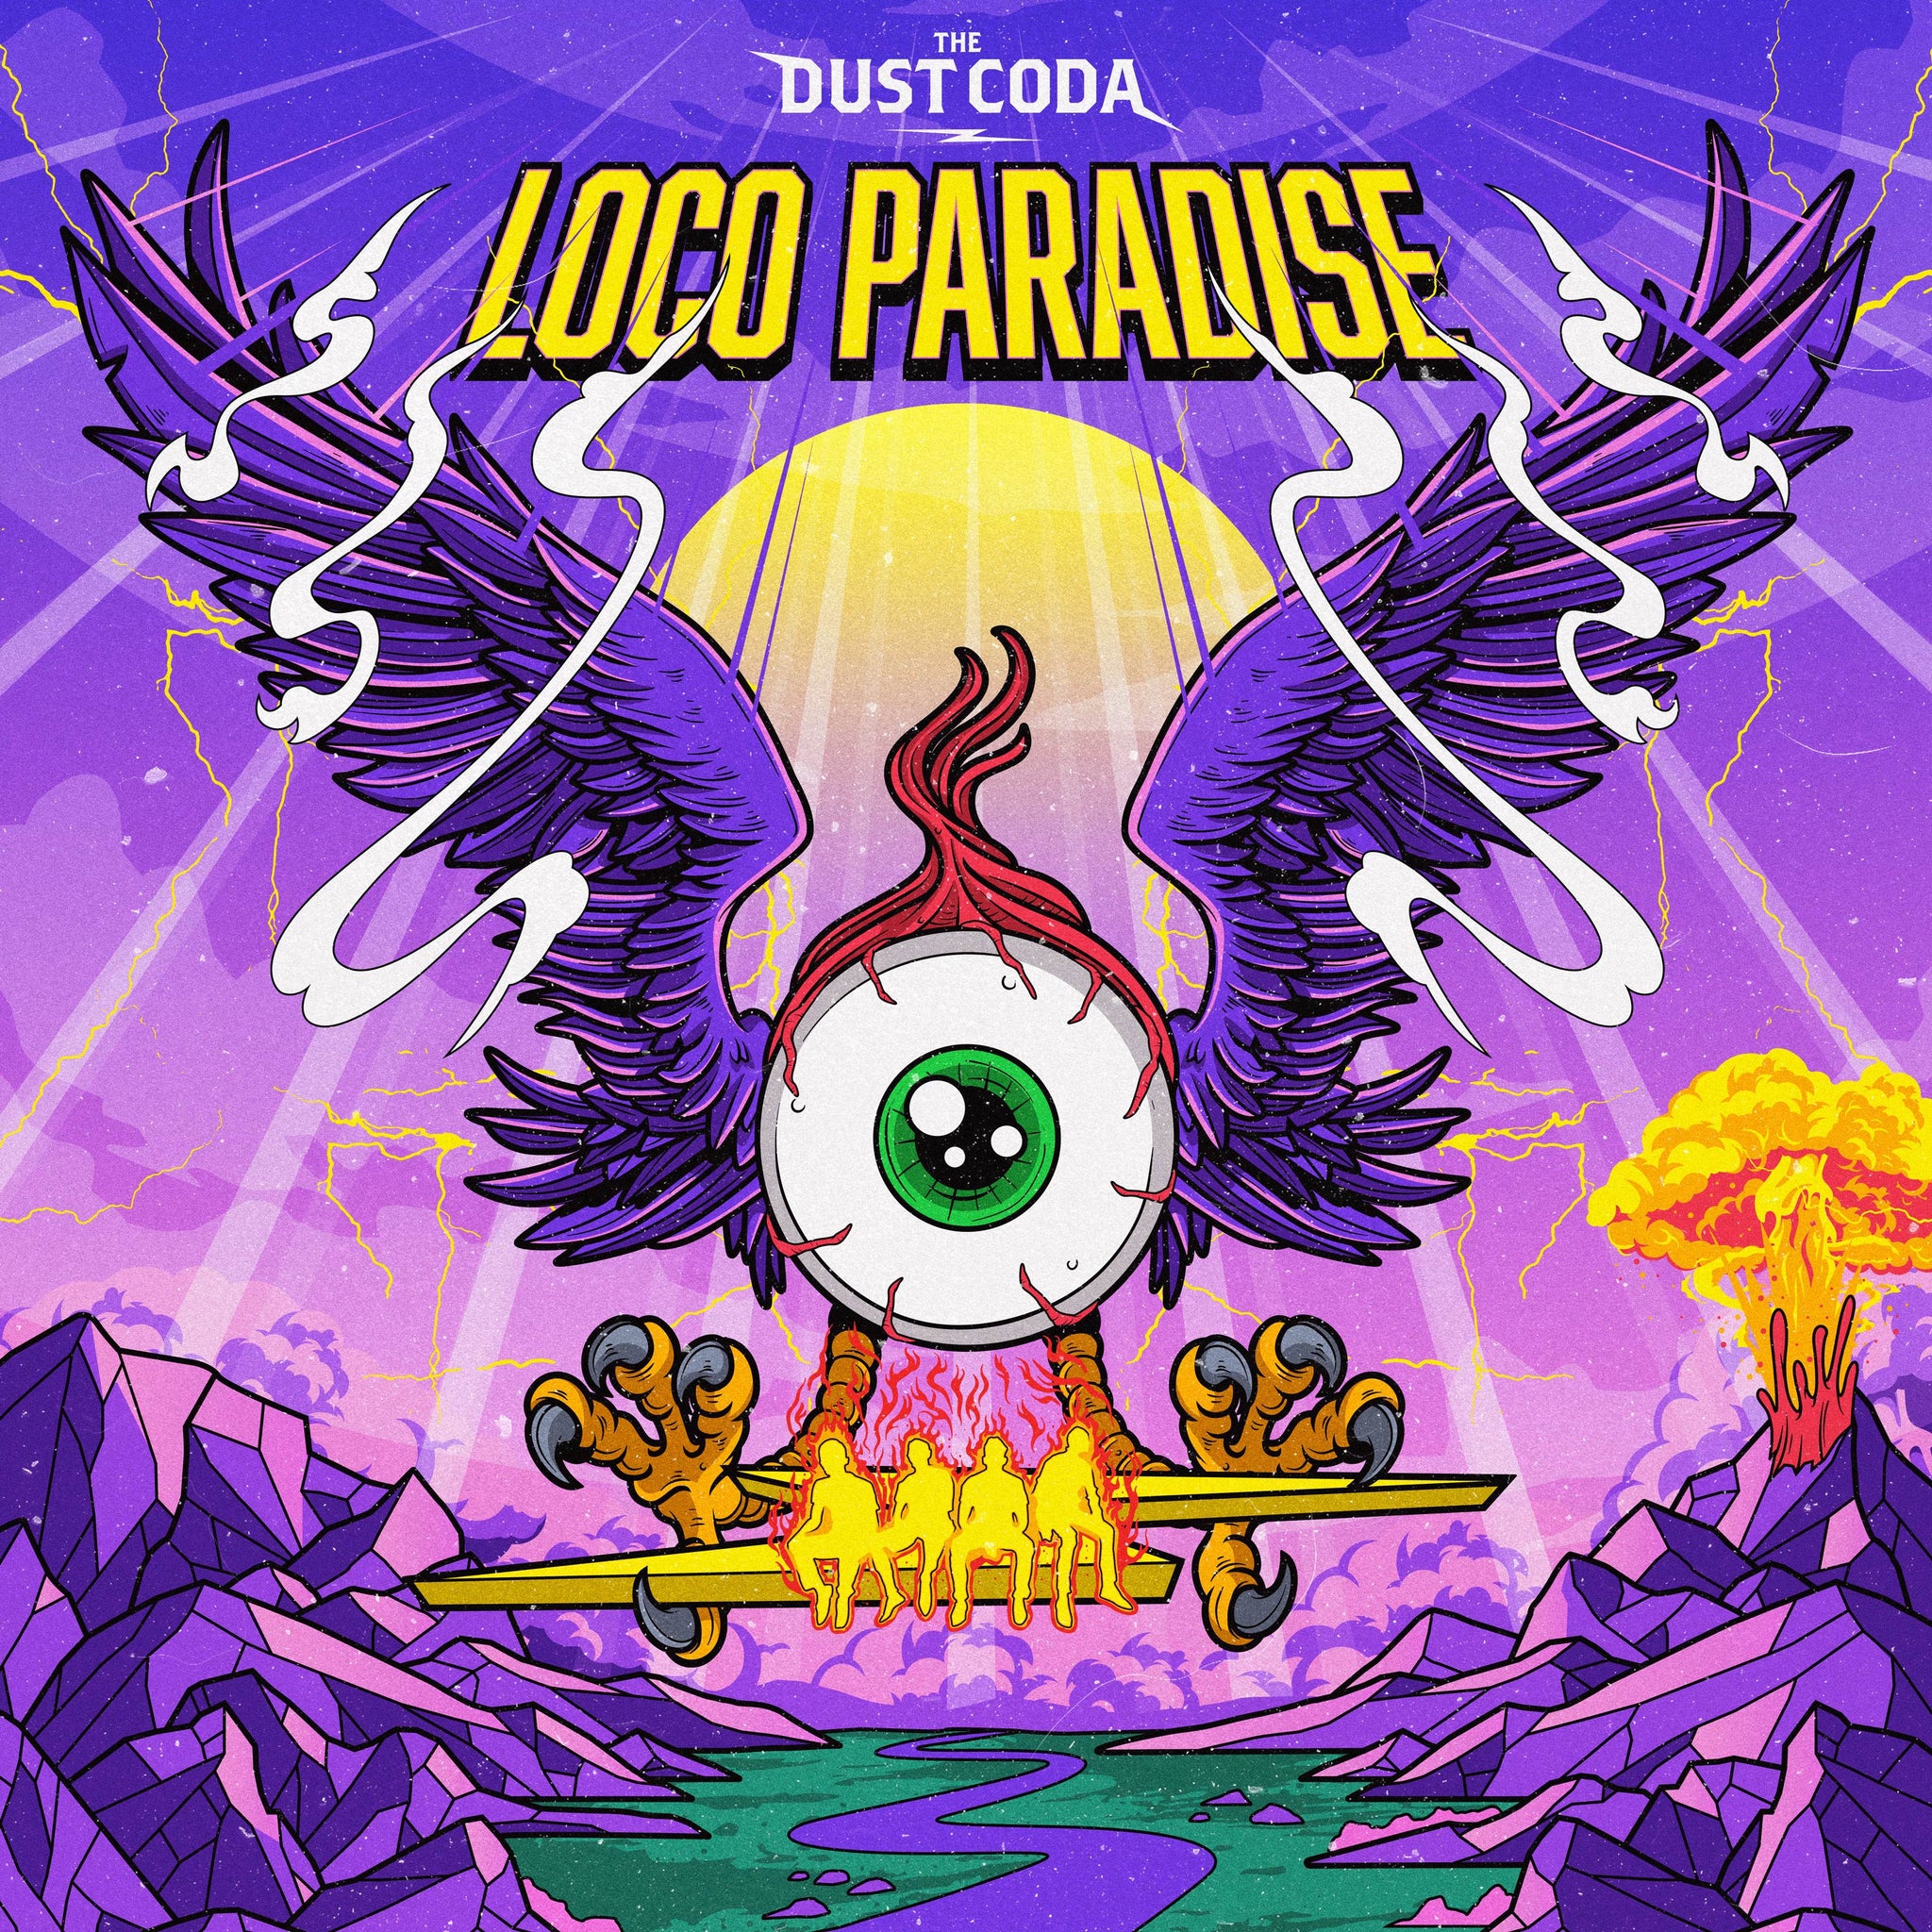 The Dust Coda "Loco Paradise" Digital Download (MP3 and WAV)